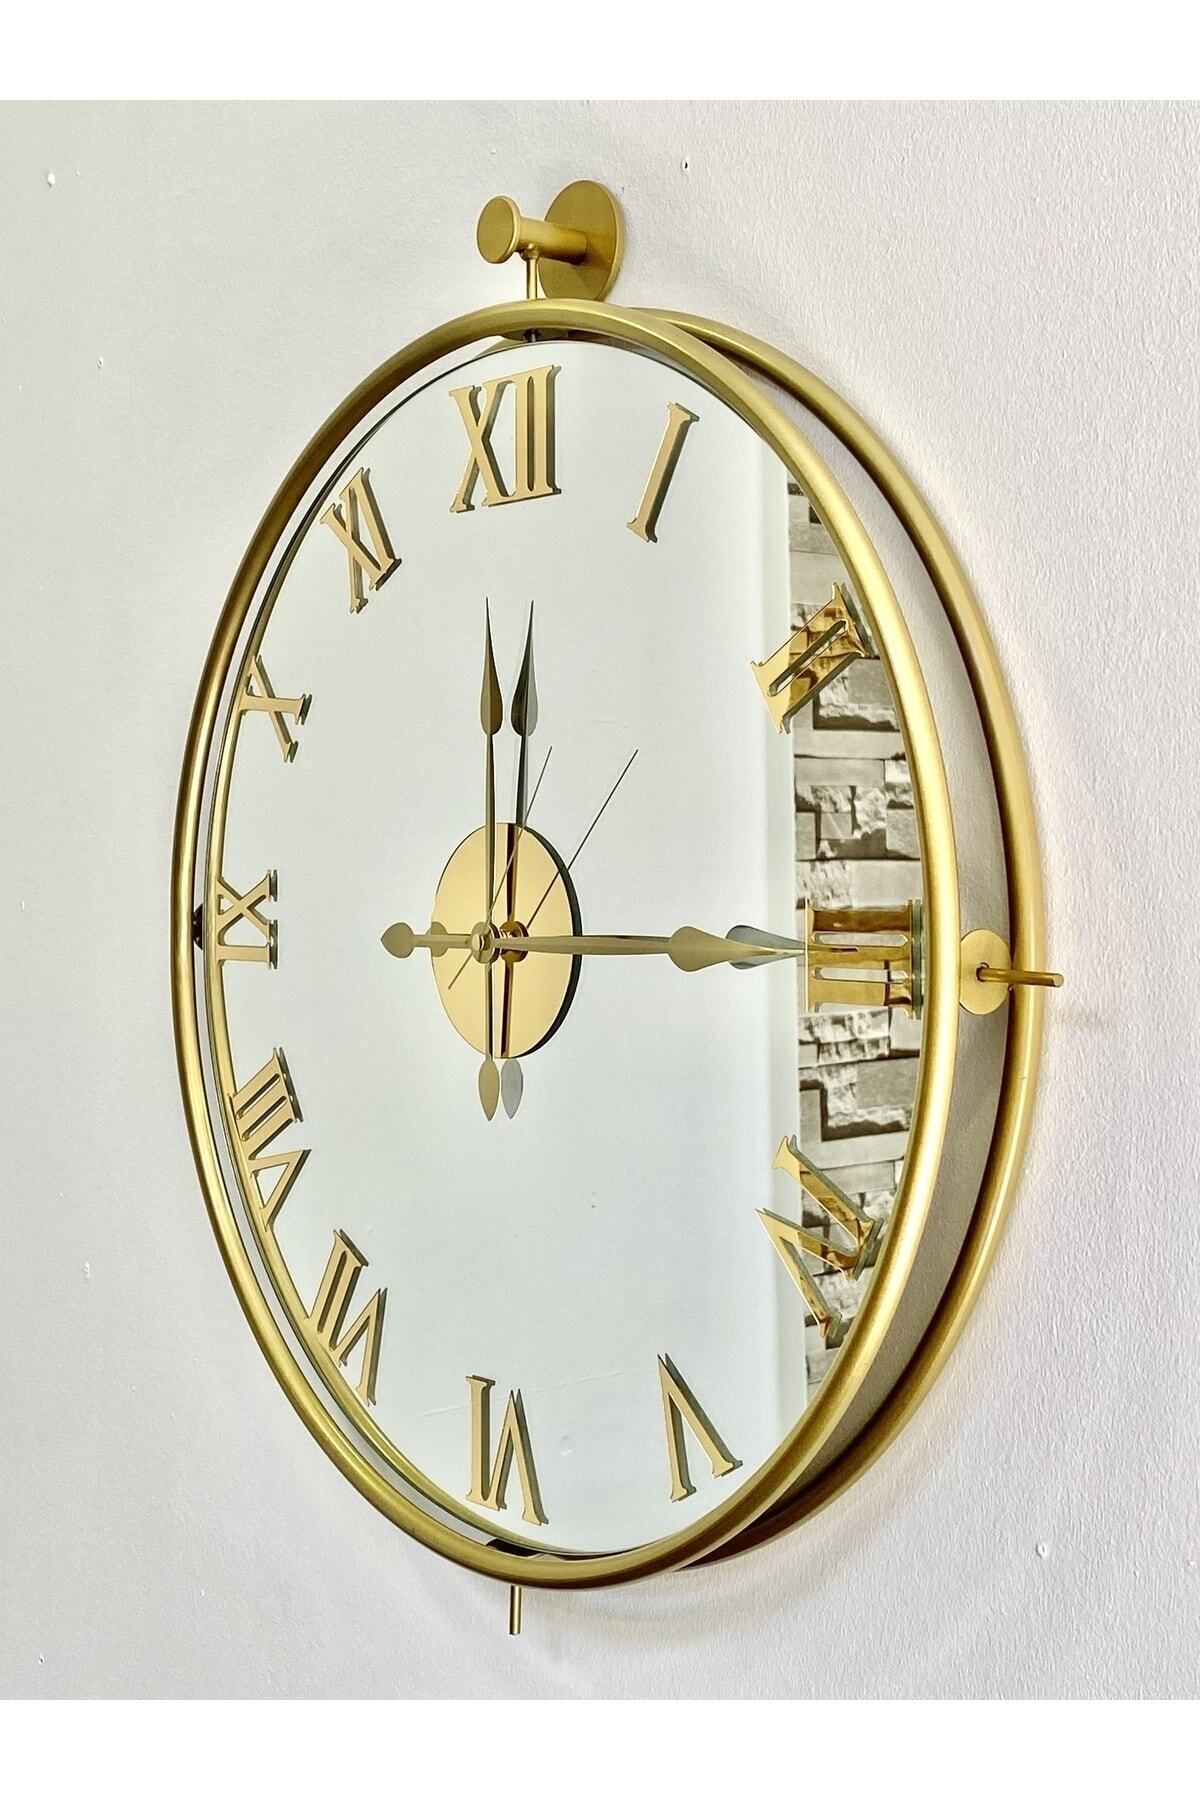 Mgs Duvar Saati Tinatti Gold Saat Aynalı Saat Roma Rakamlı Aynalı Gold Saat Duvar Saati